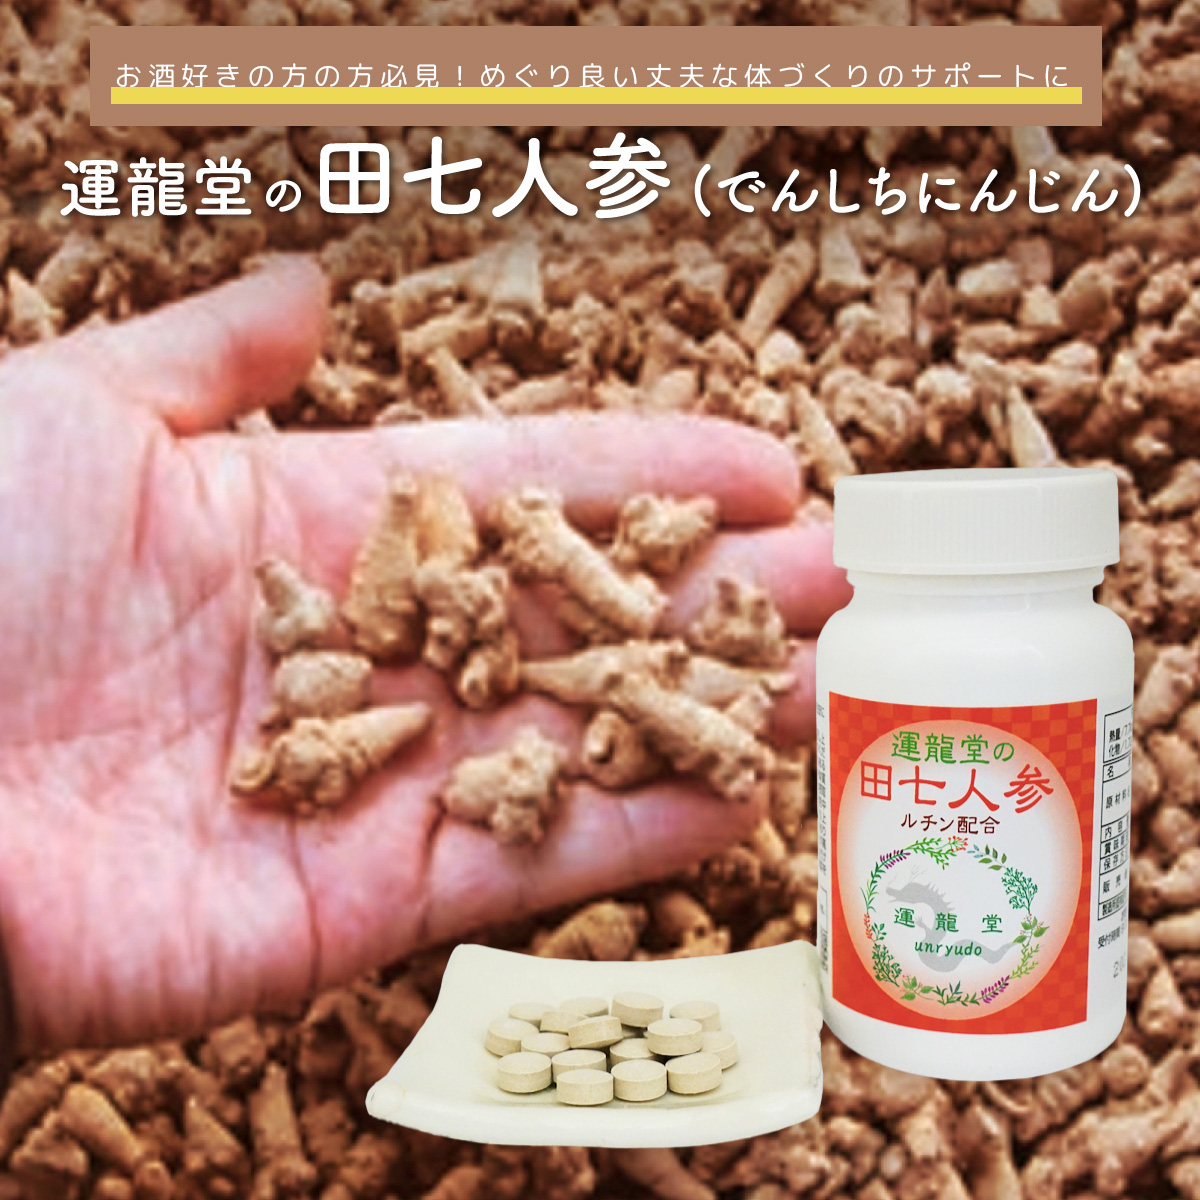 Ginseng Supplement of Unryudo